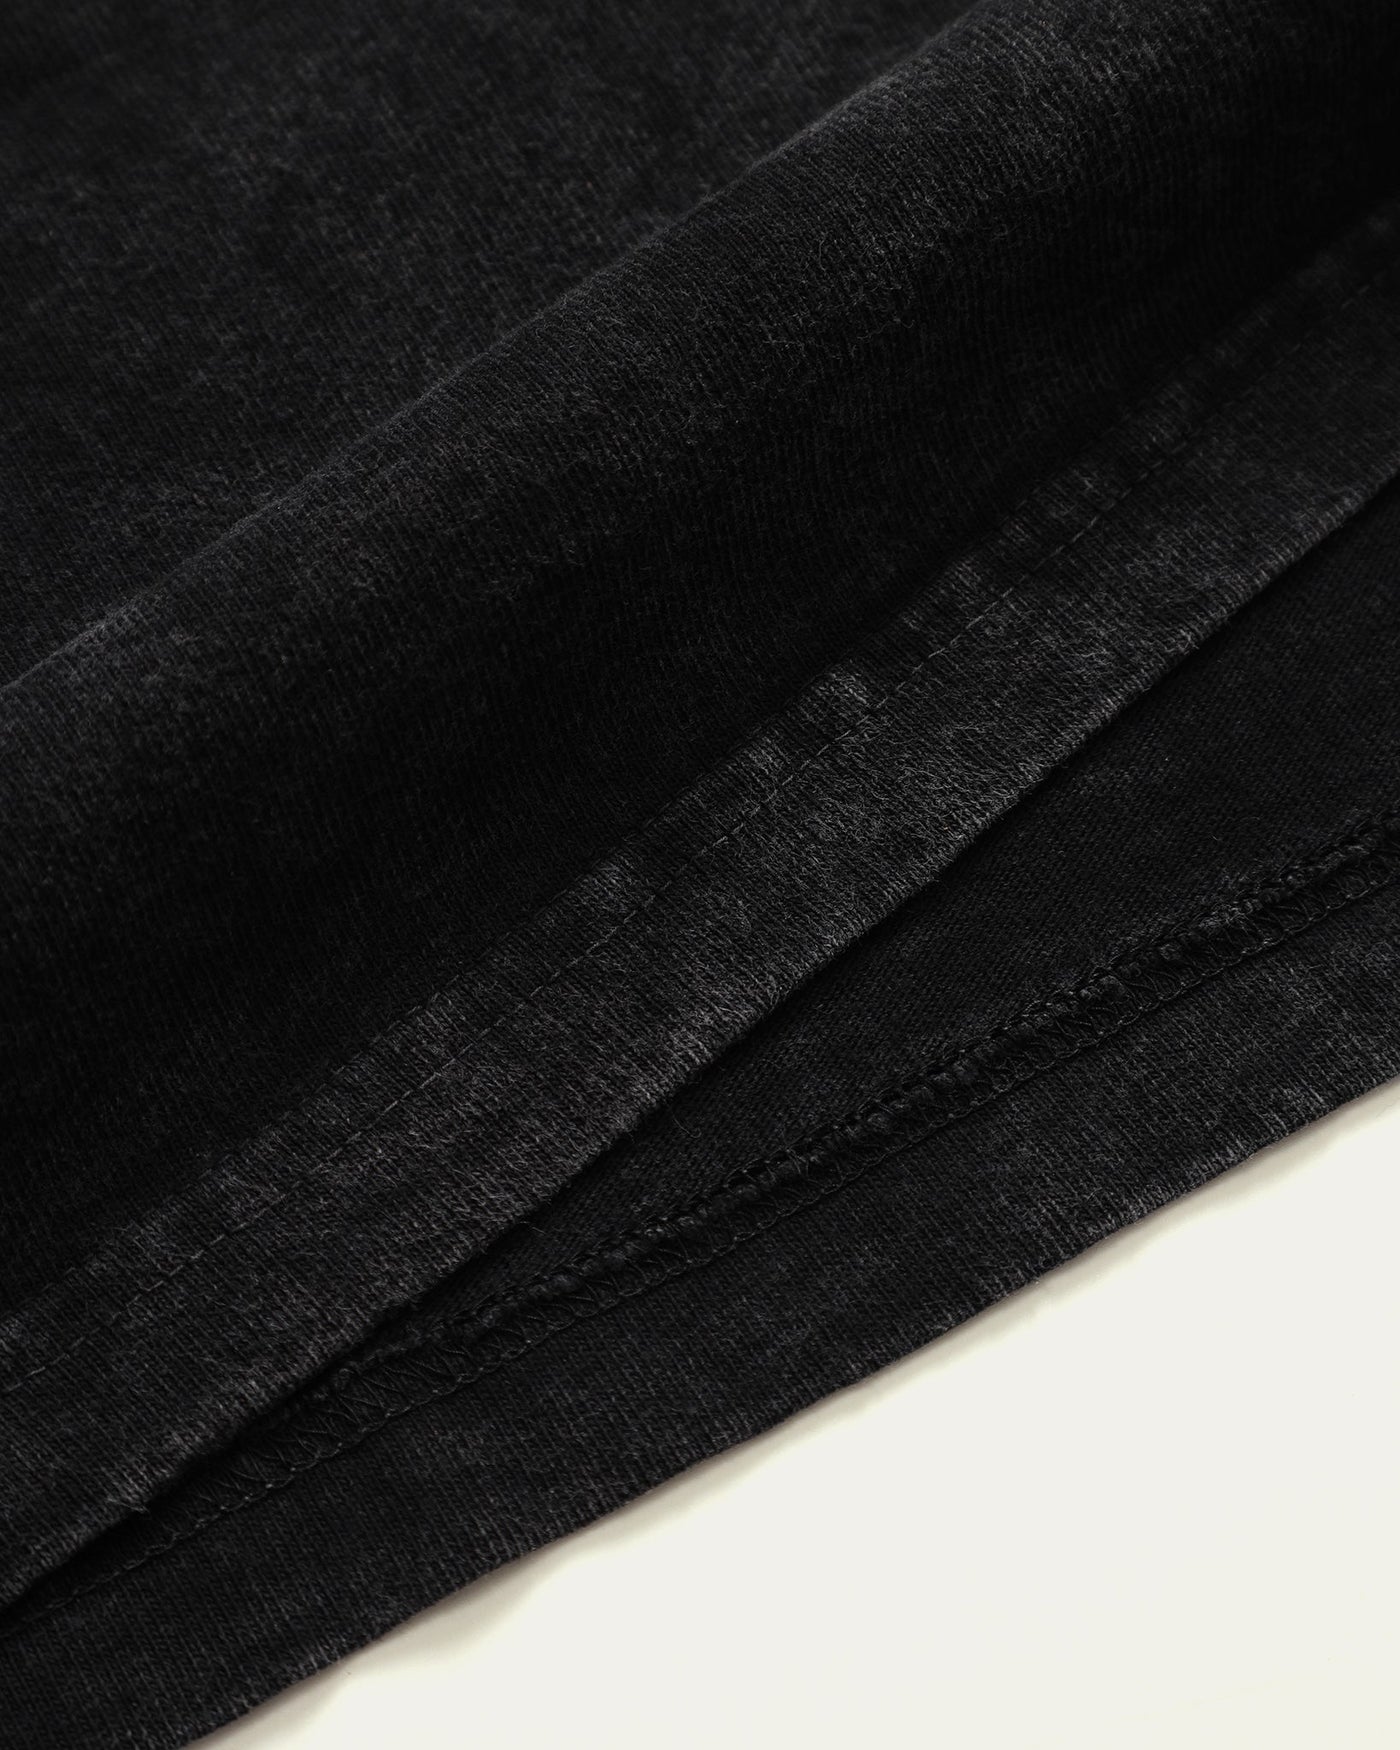 Wash Polo Shirt - Black - TOBI